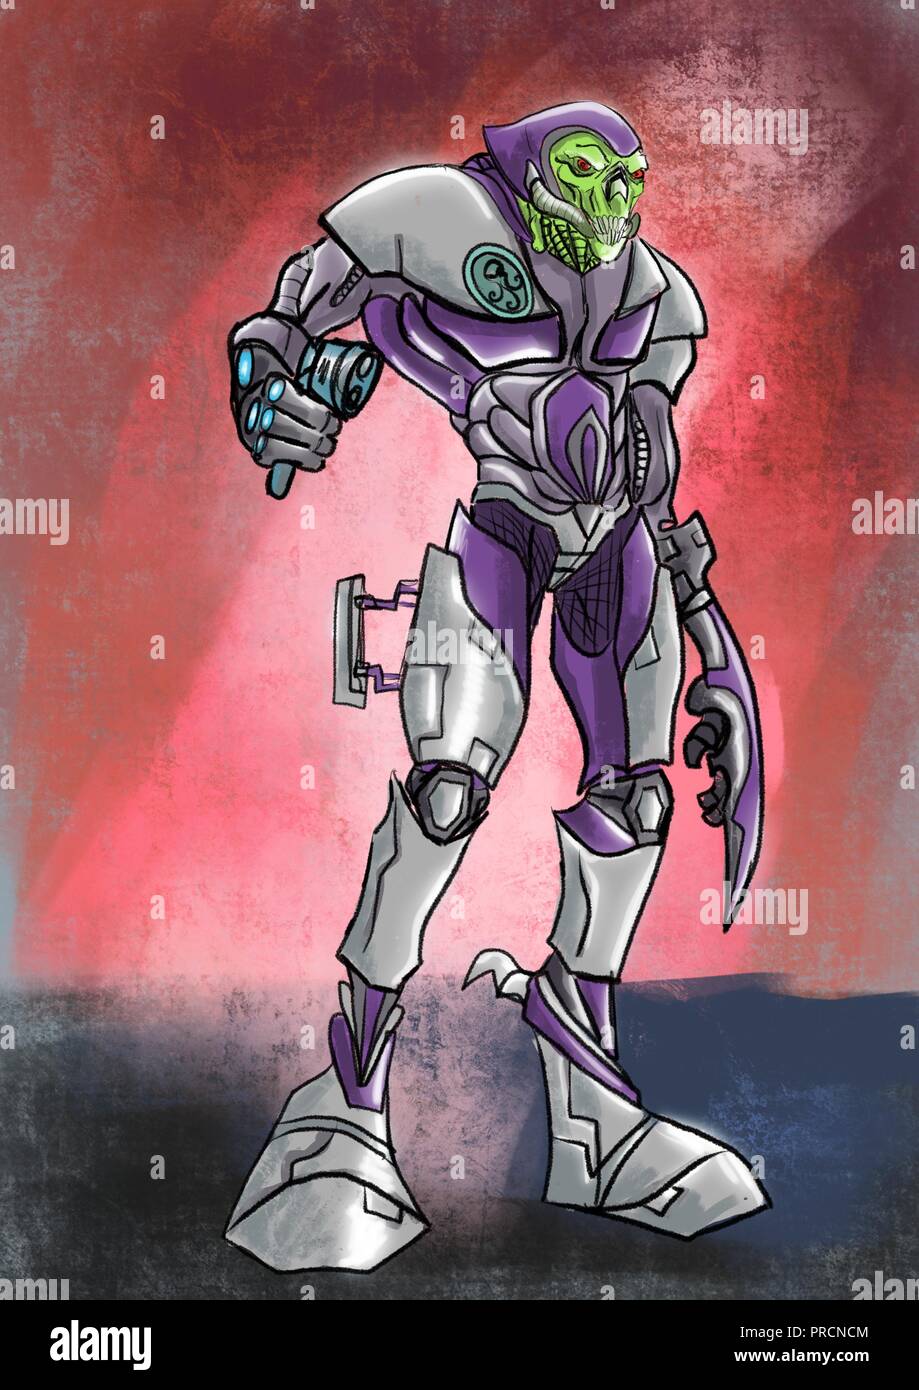 alien bounty hunter illustration Stock Photo